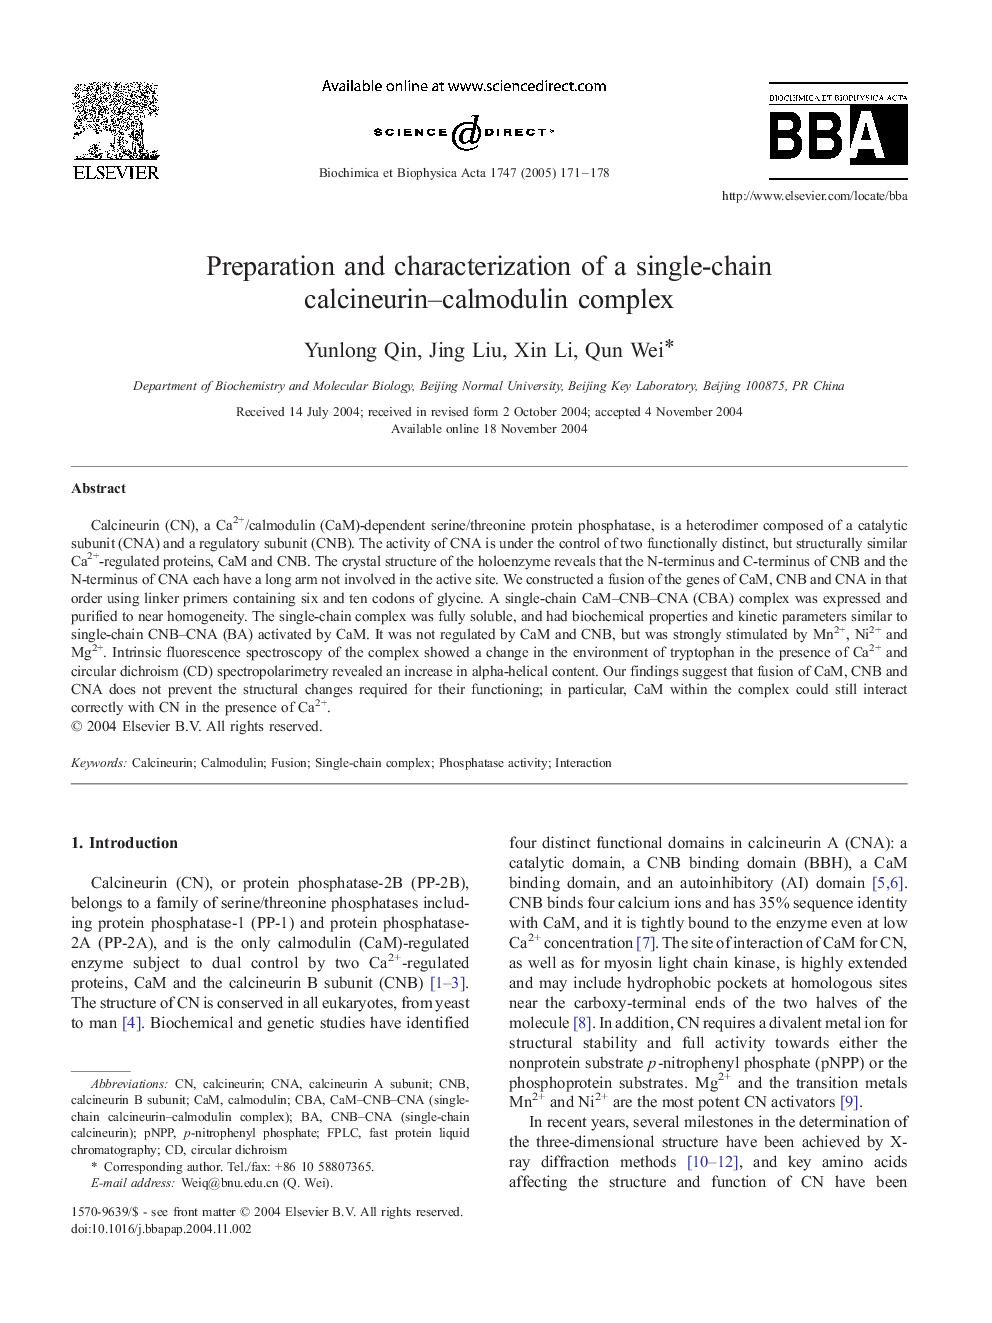 Preparation and characterization of a single-chain calcineurin-calmodulin complex